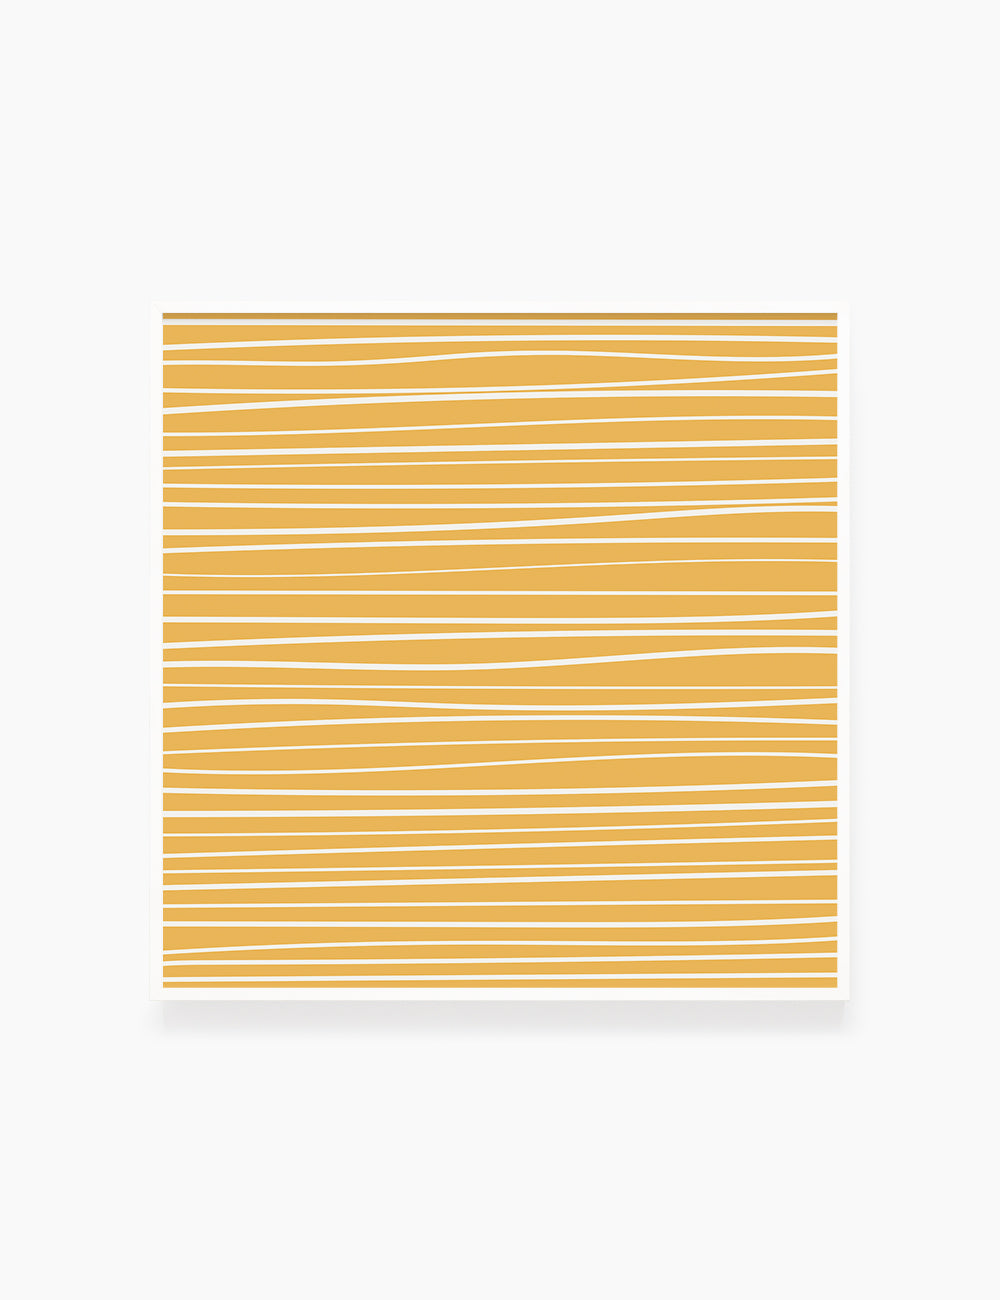 WAVY LINES. YELLOW. Minimalist. Abstract. Boho Art. Printable Wall Art Illustration. - PAPER MOON Art & Design